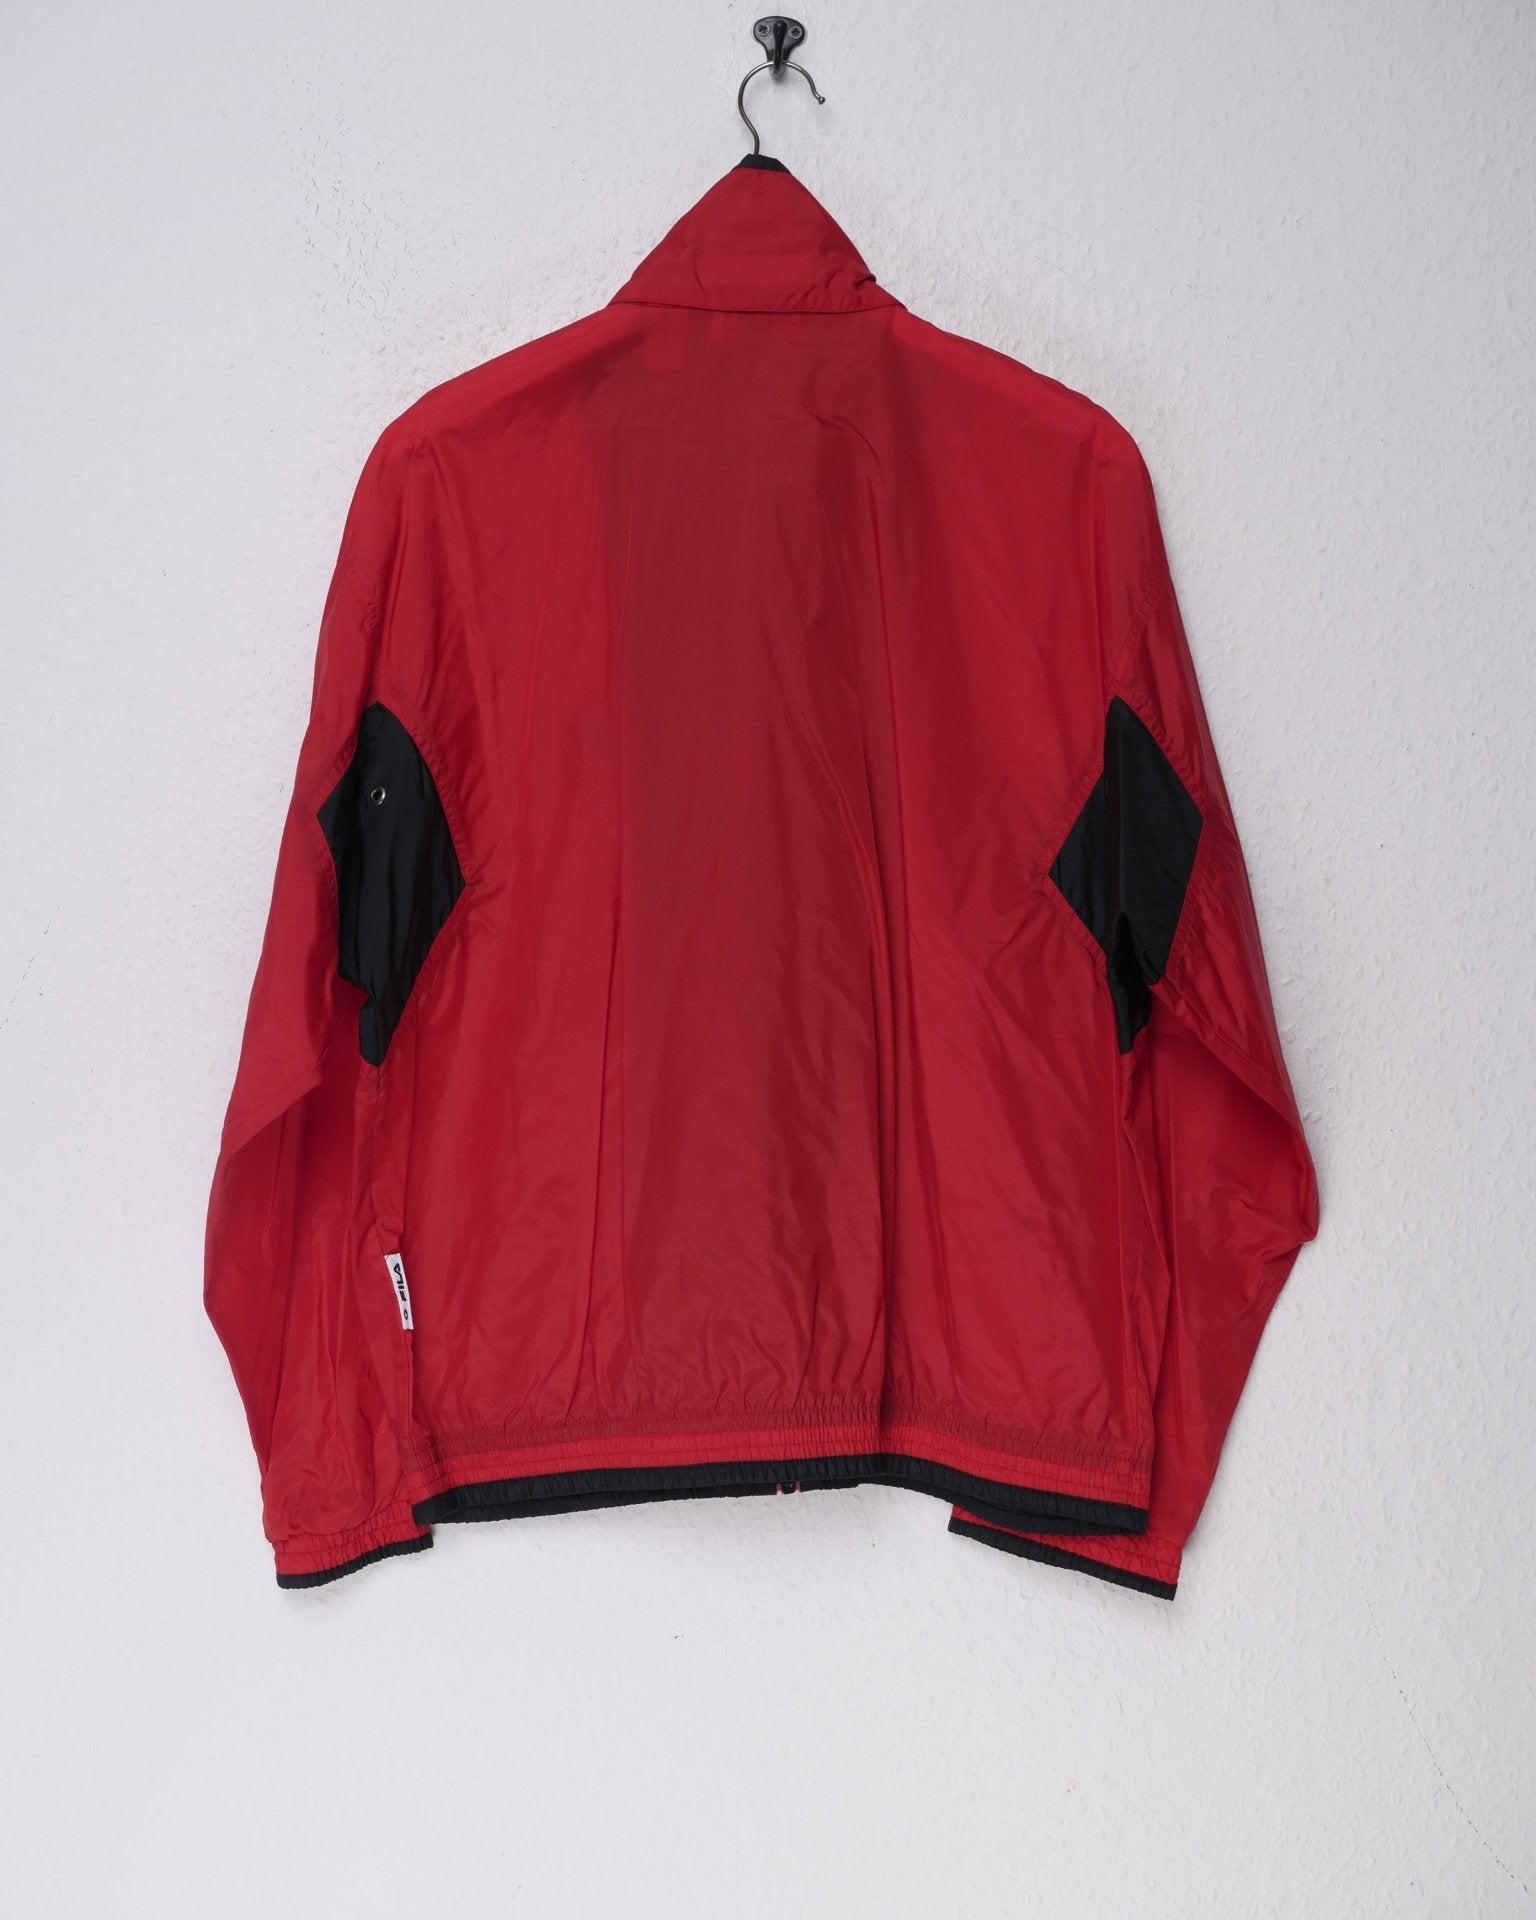 Fila embroidered Logo red Vintage Track Jacket - Peeces